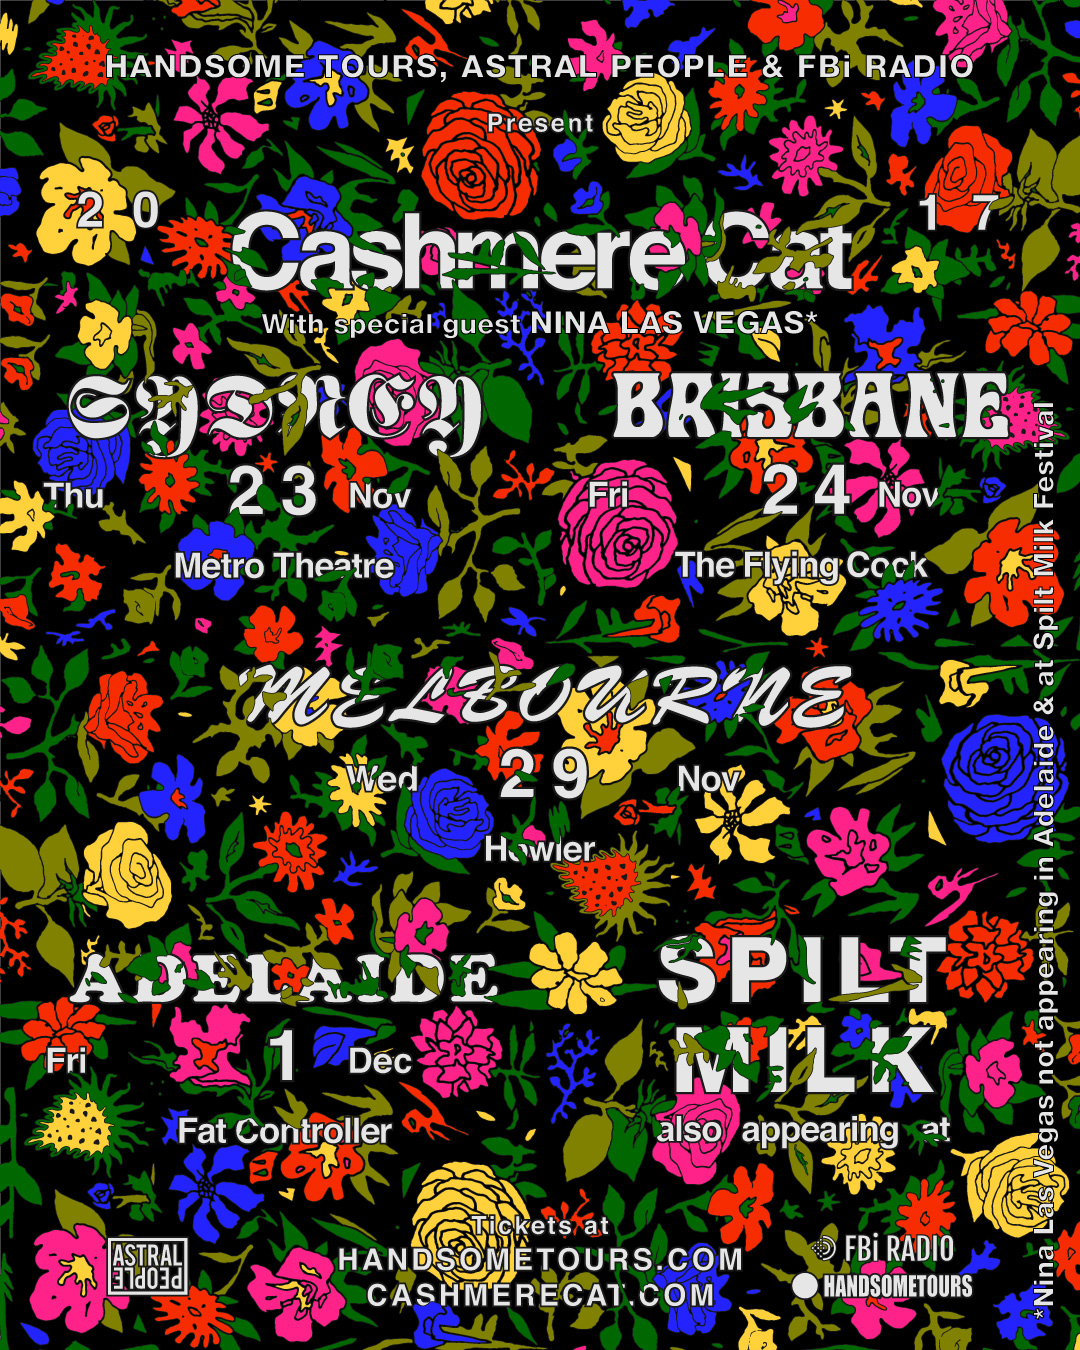 https://www.handsometours.com/wp-content/uploads/2017/08/Cashmere_Cat_All_Dates-2.jpg